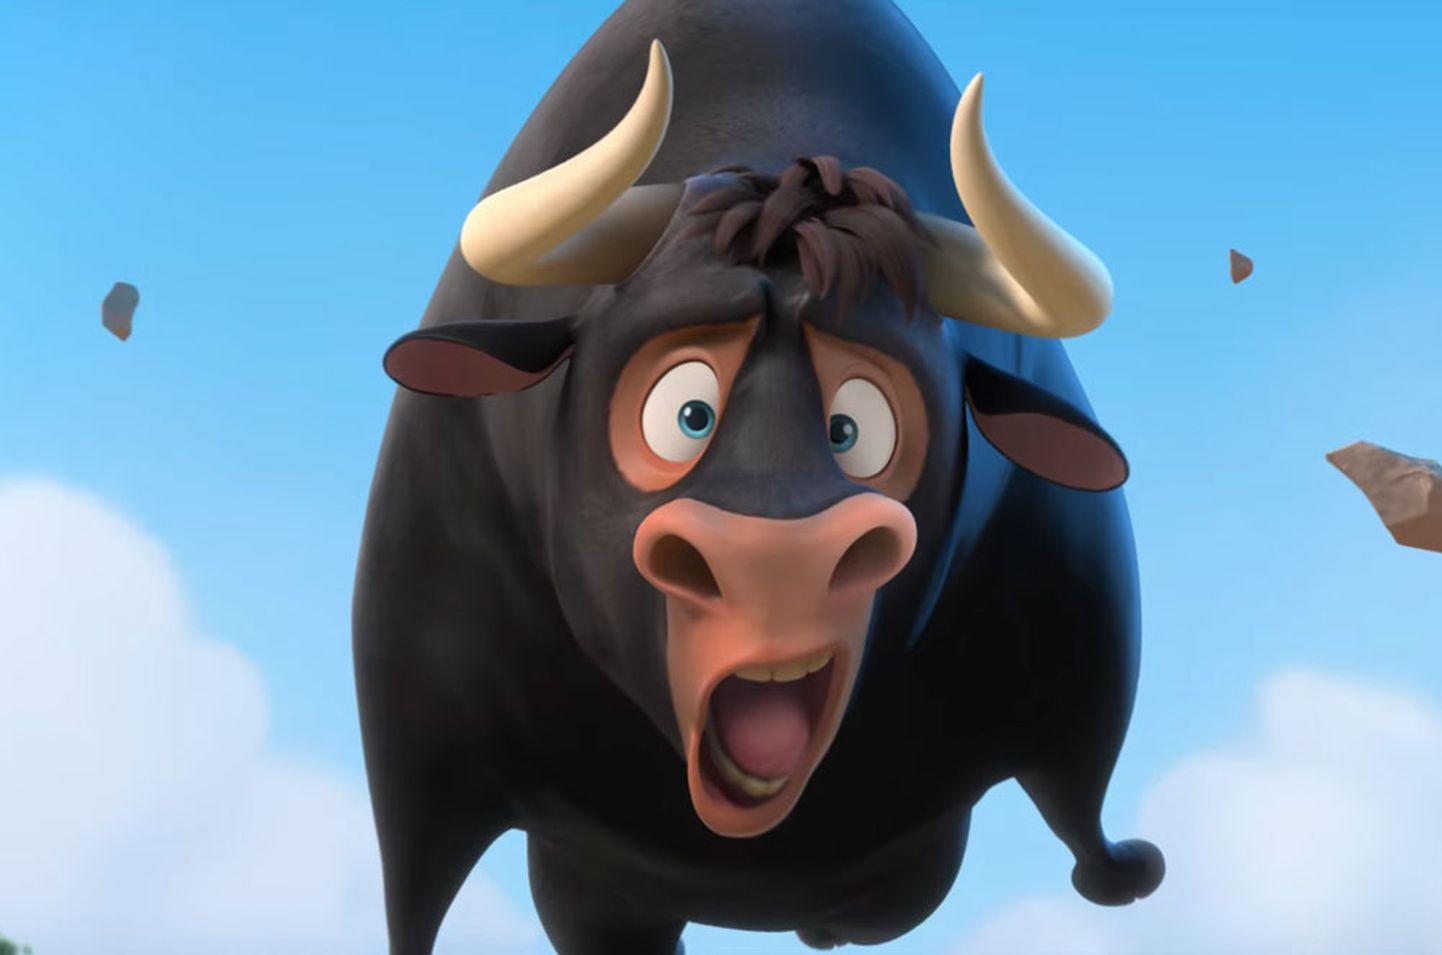 Animafilm "Ferdinand"